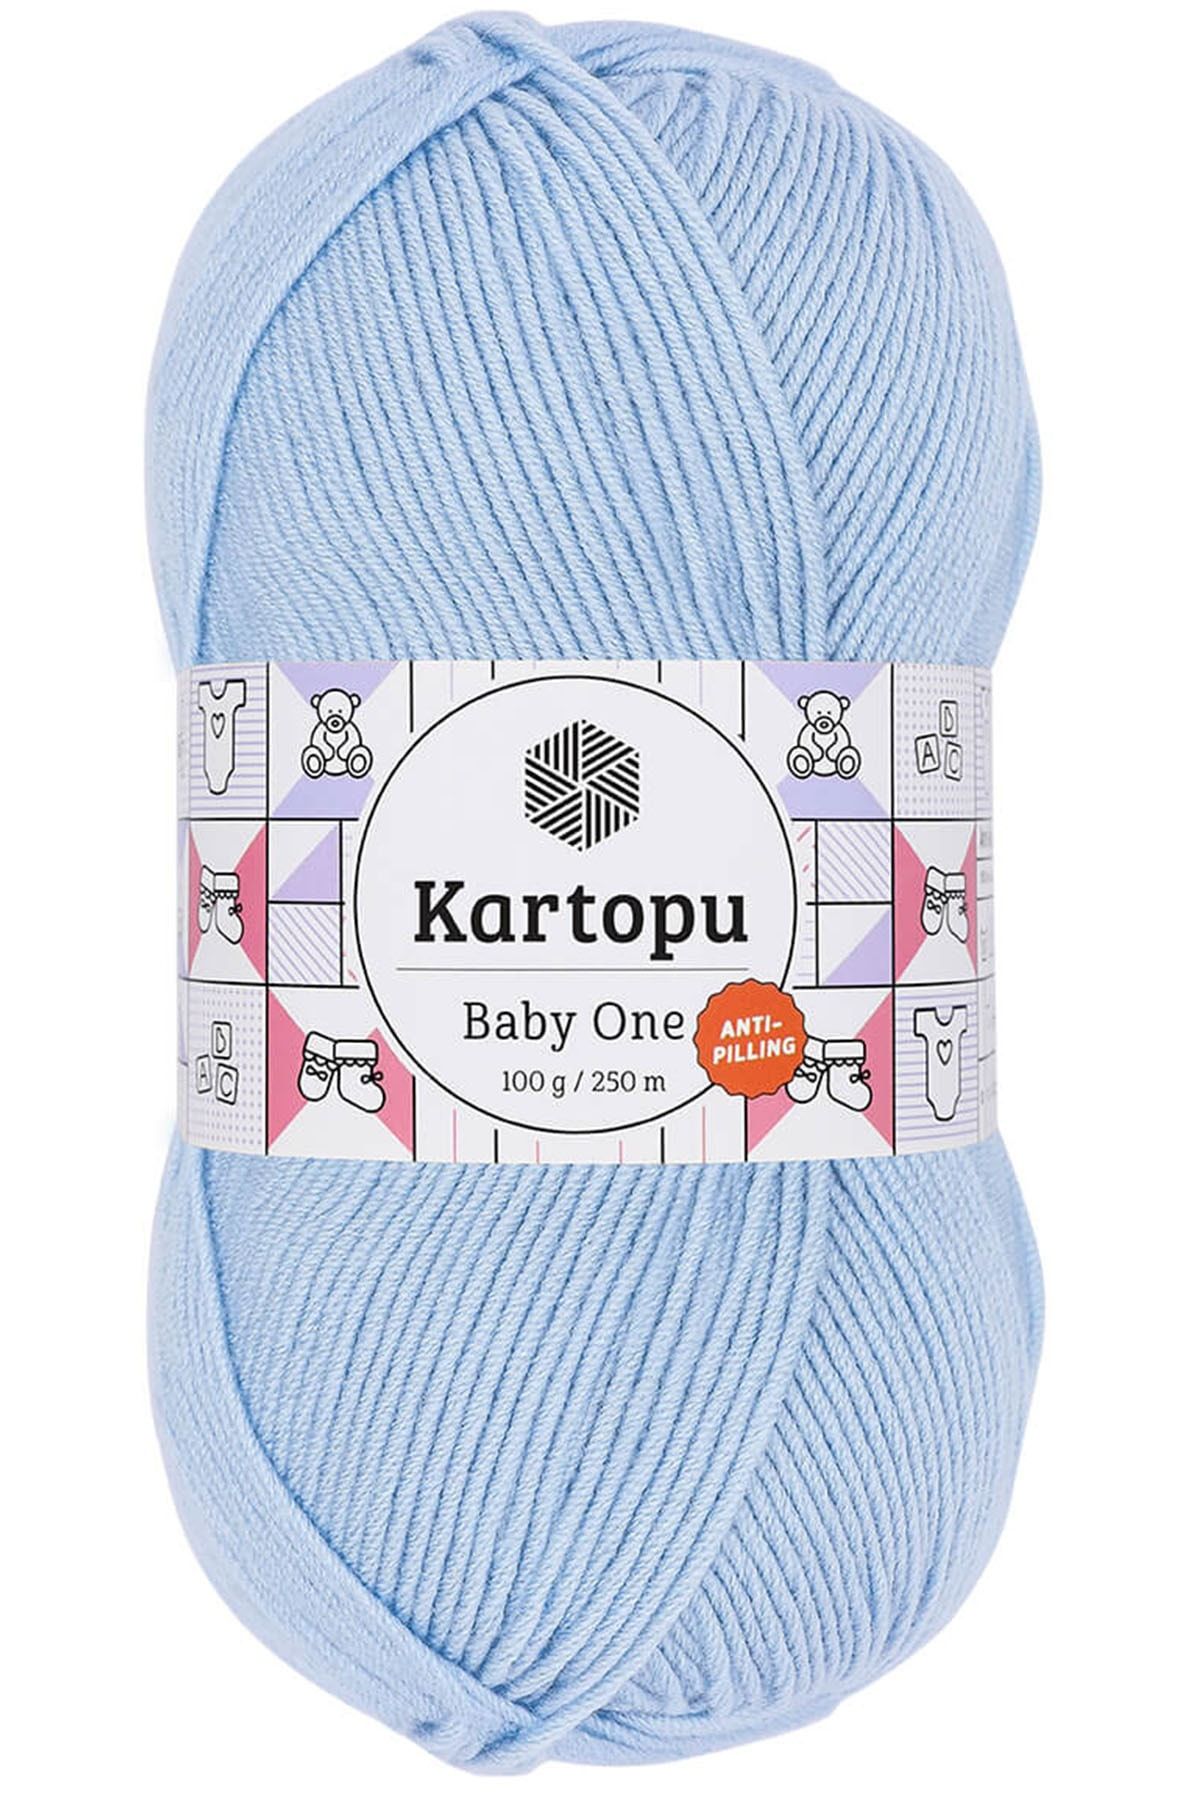 Kartopu Baby One Tüylenmeyen Bebek Yünü Bebe Mavi K544